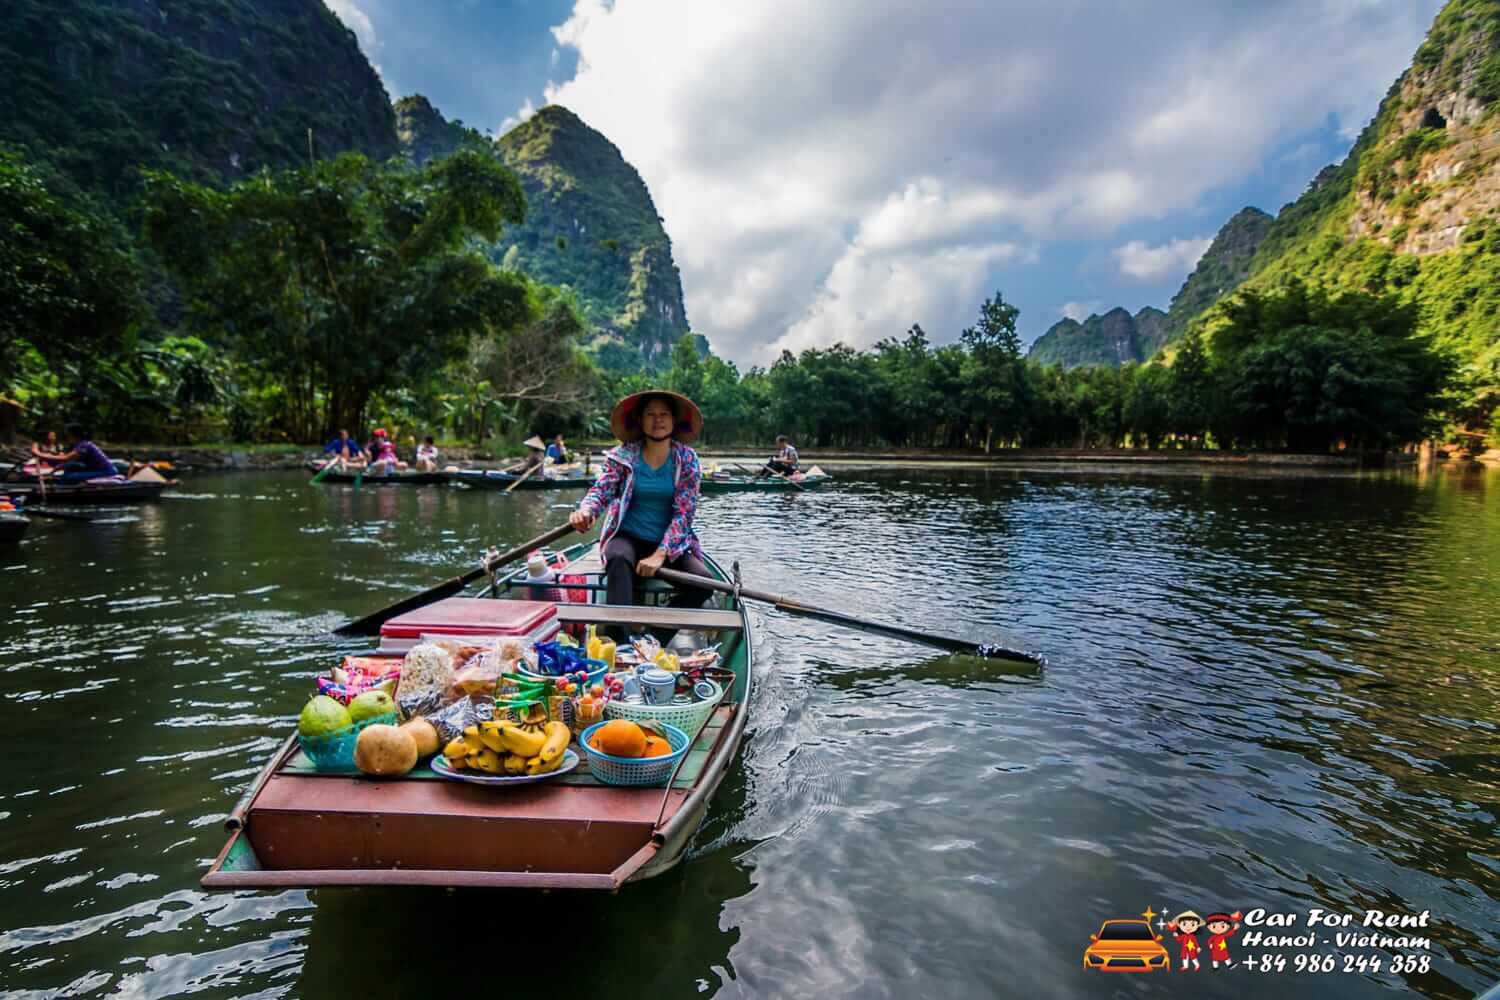 SixtVN Car Rental Travel Vietnam Photo Stock best vietnam travel agency